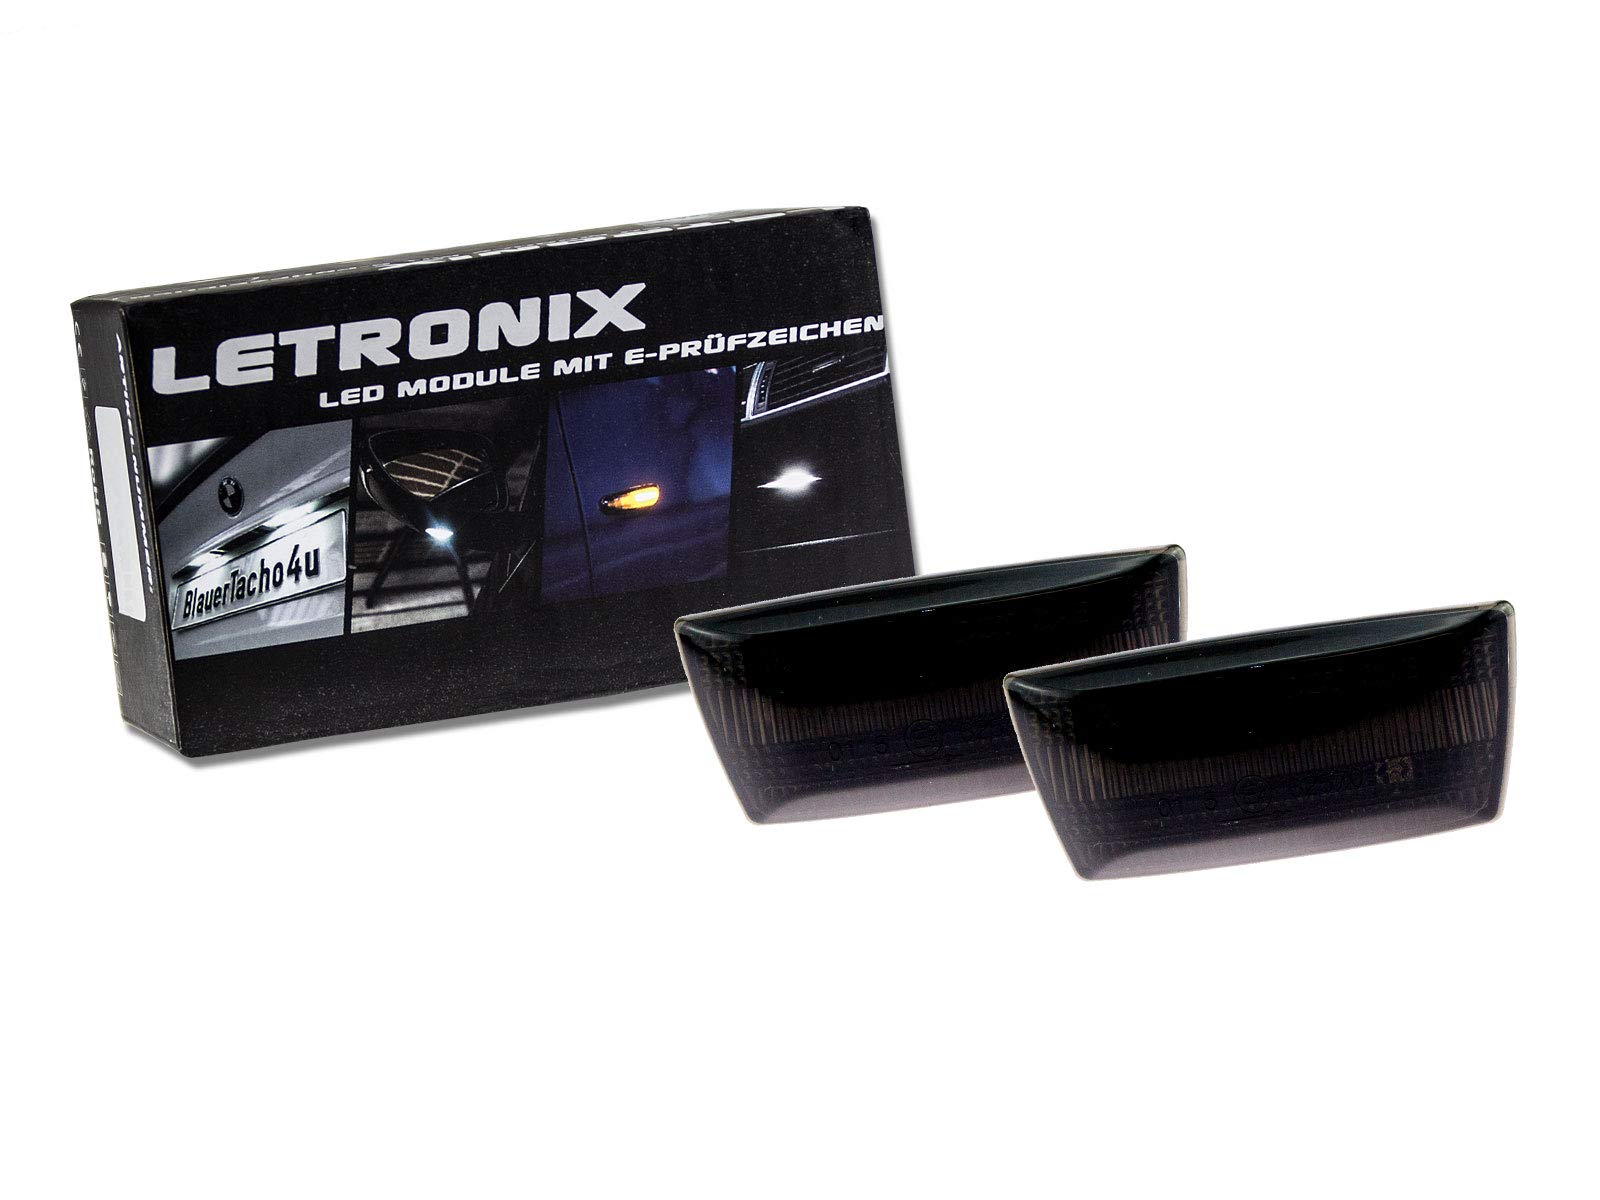 LETRONIX LED Seitenblinker Blinker Module Smoke Schwarz Adam geeignet für Astra J/Corsa E/Insignia A/Meriva B/Zafira B/Cruze J300 mit E-Prüfzeichen von letronix